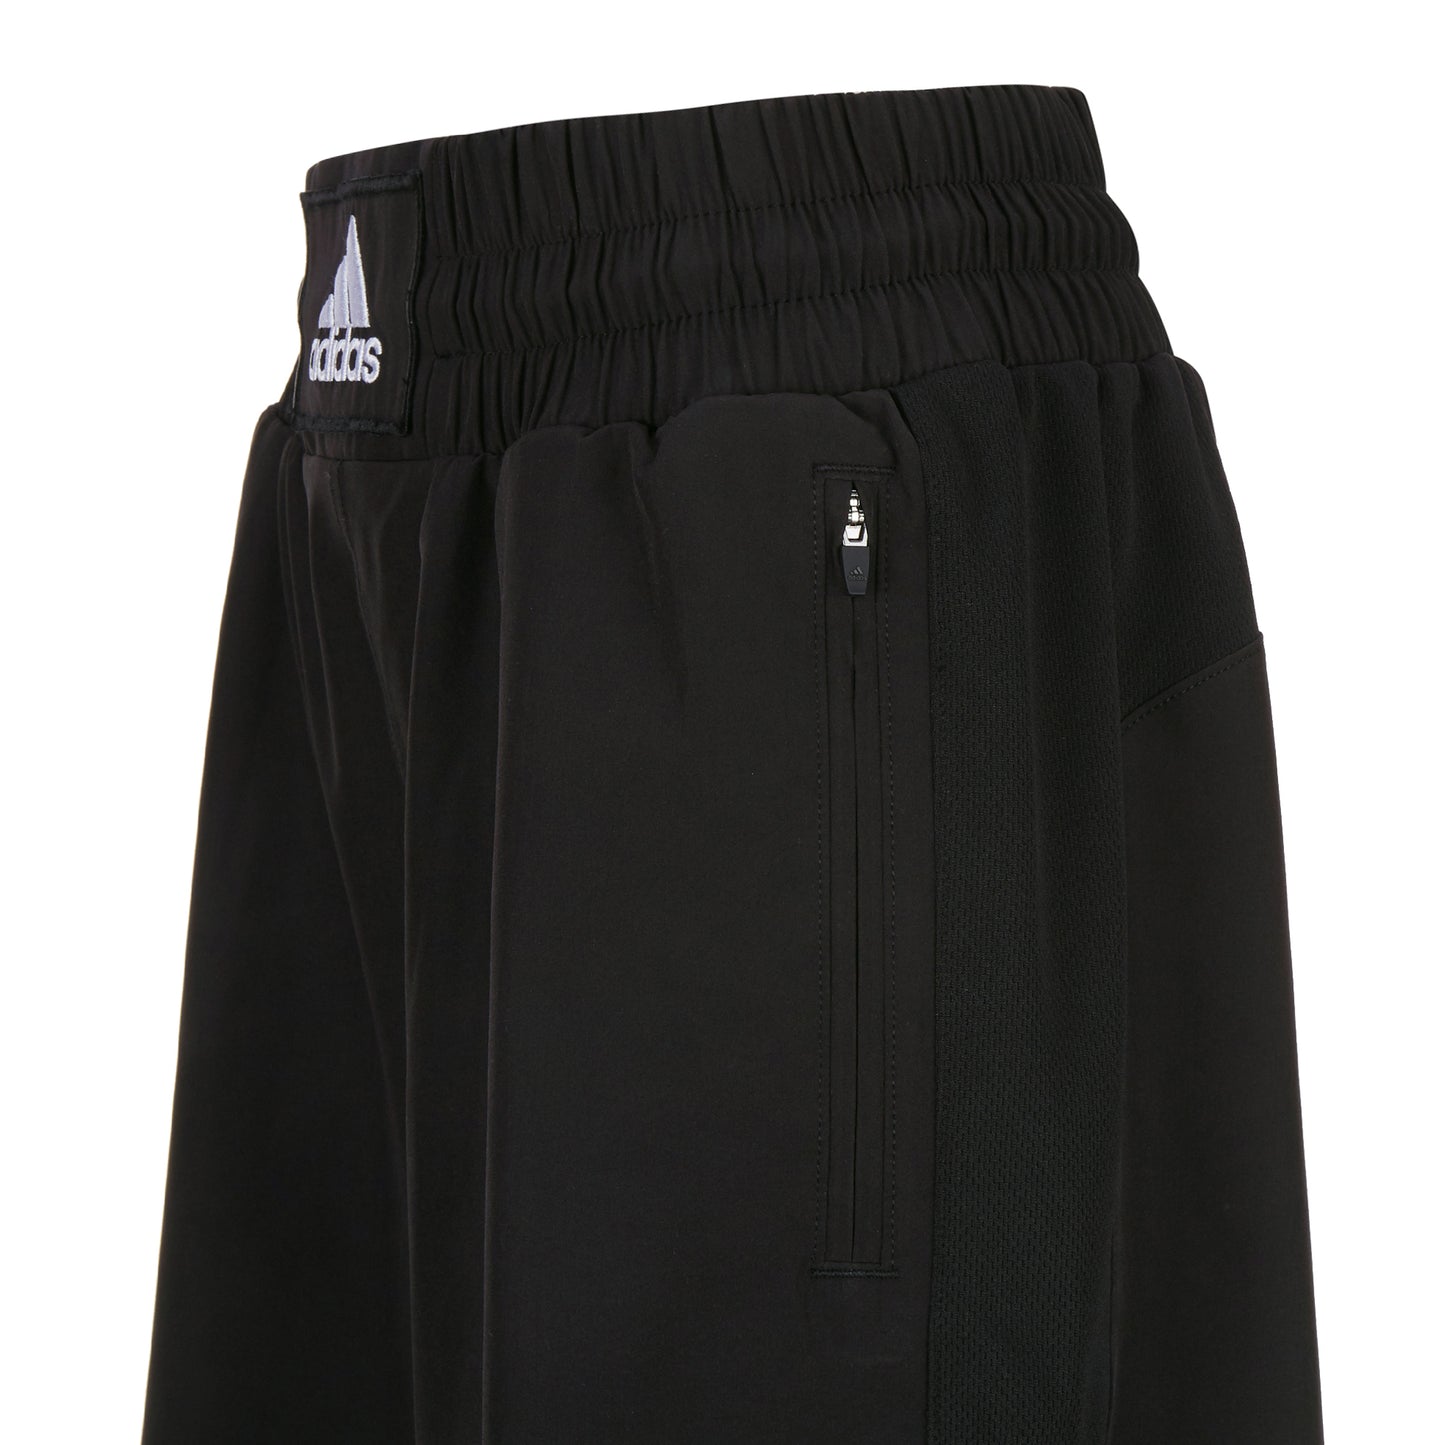 Bxwtsh01 Adidas Boxwear Tech Shorts Black 04